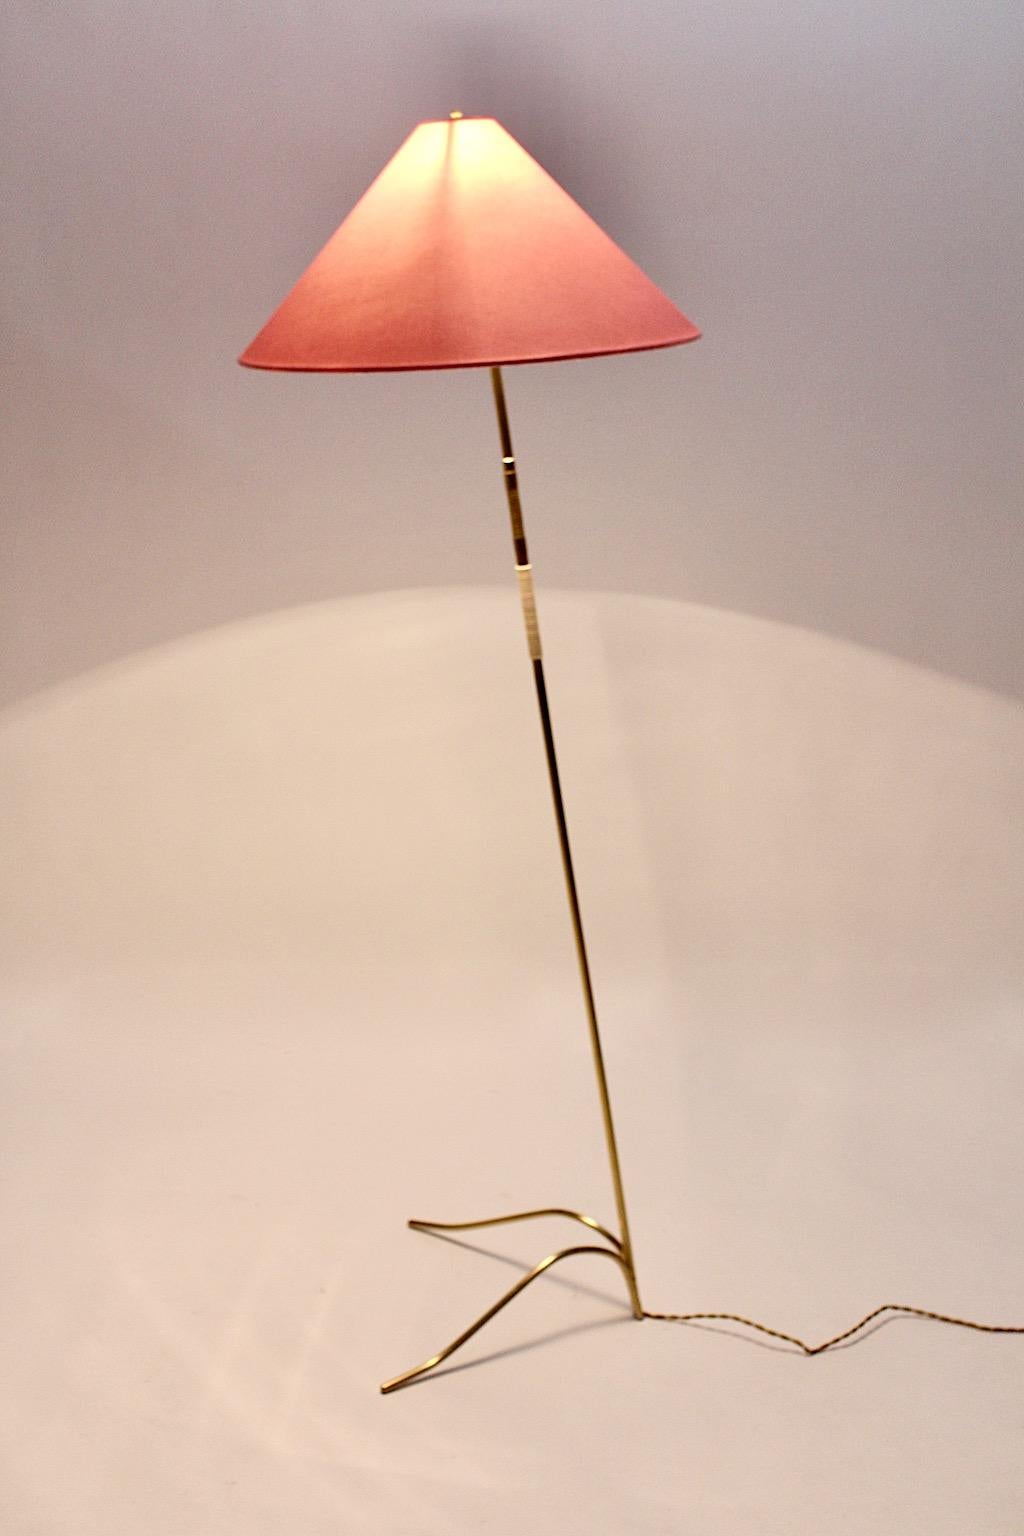 Brass Vintage Mid-Century Modern Splayfoot Floor Lamp Rupert Nikoll 1950 Austria For Sale 3